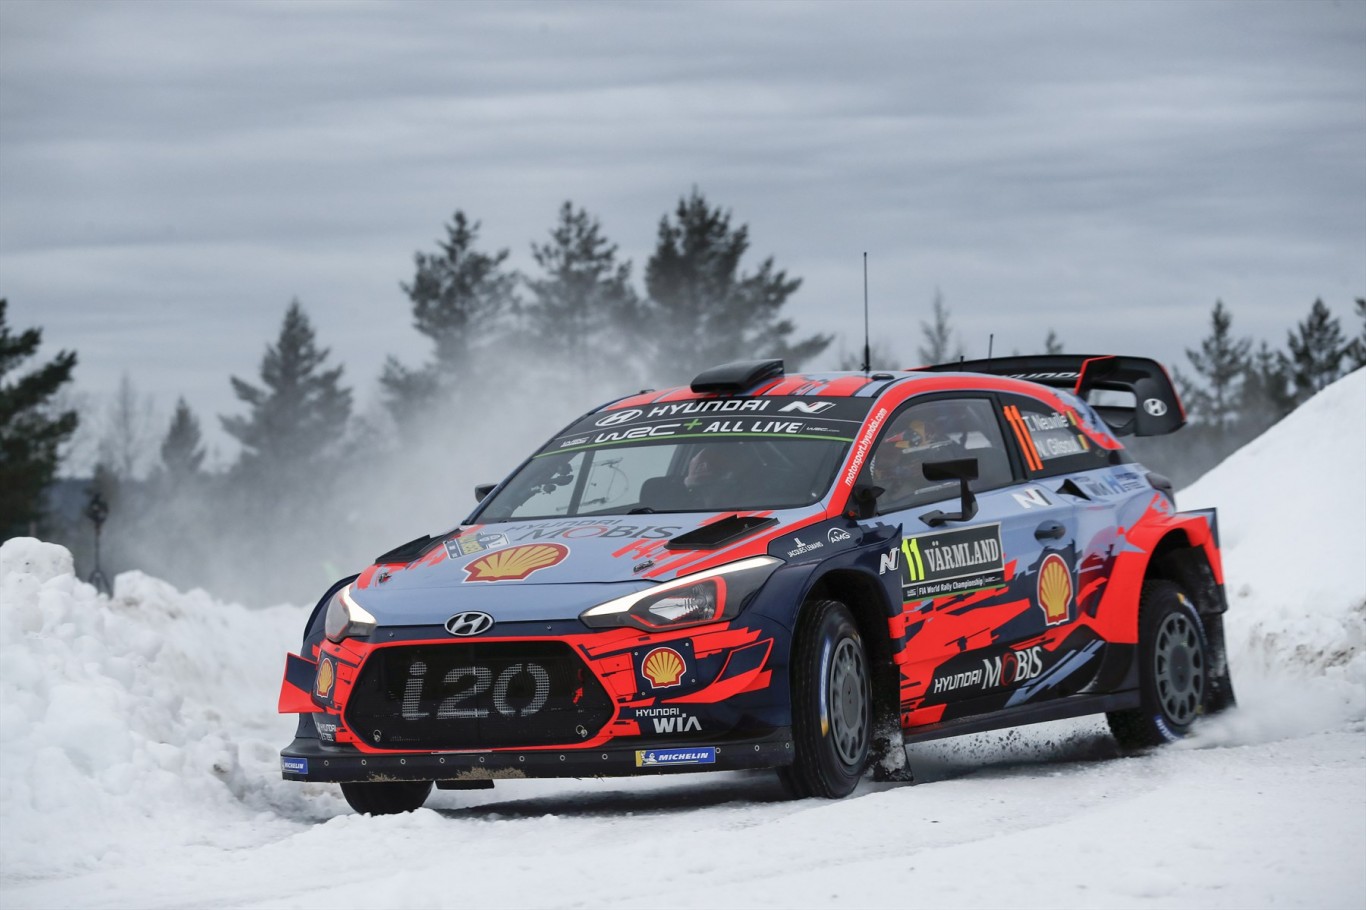 Hyundai on podium again in Rally Sweden